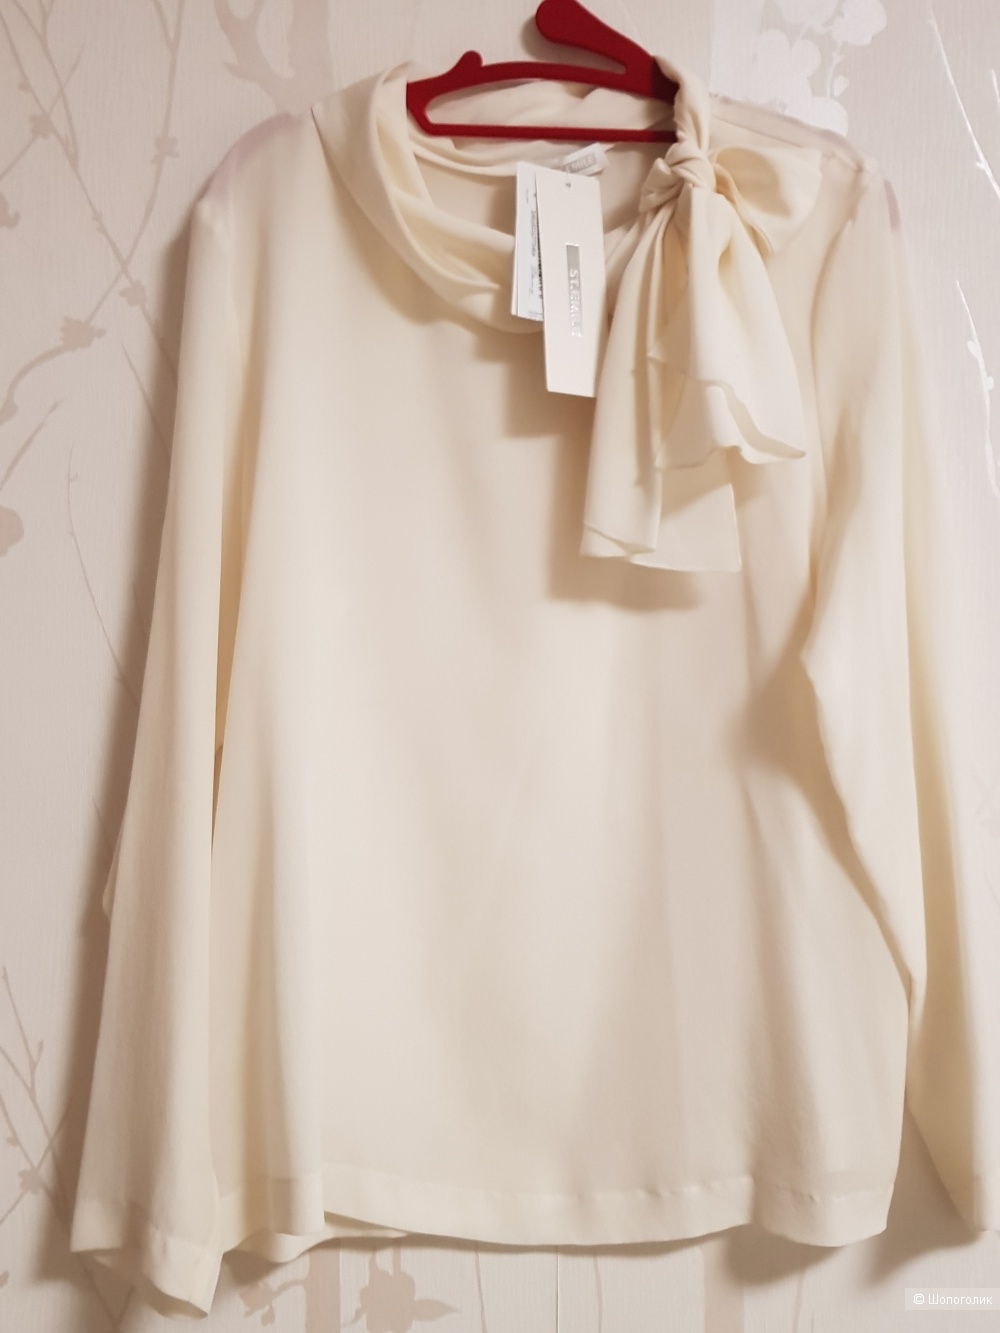 Блузка St.Emile,48 размер (42 EU)